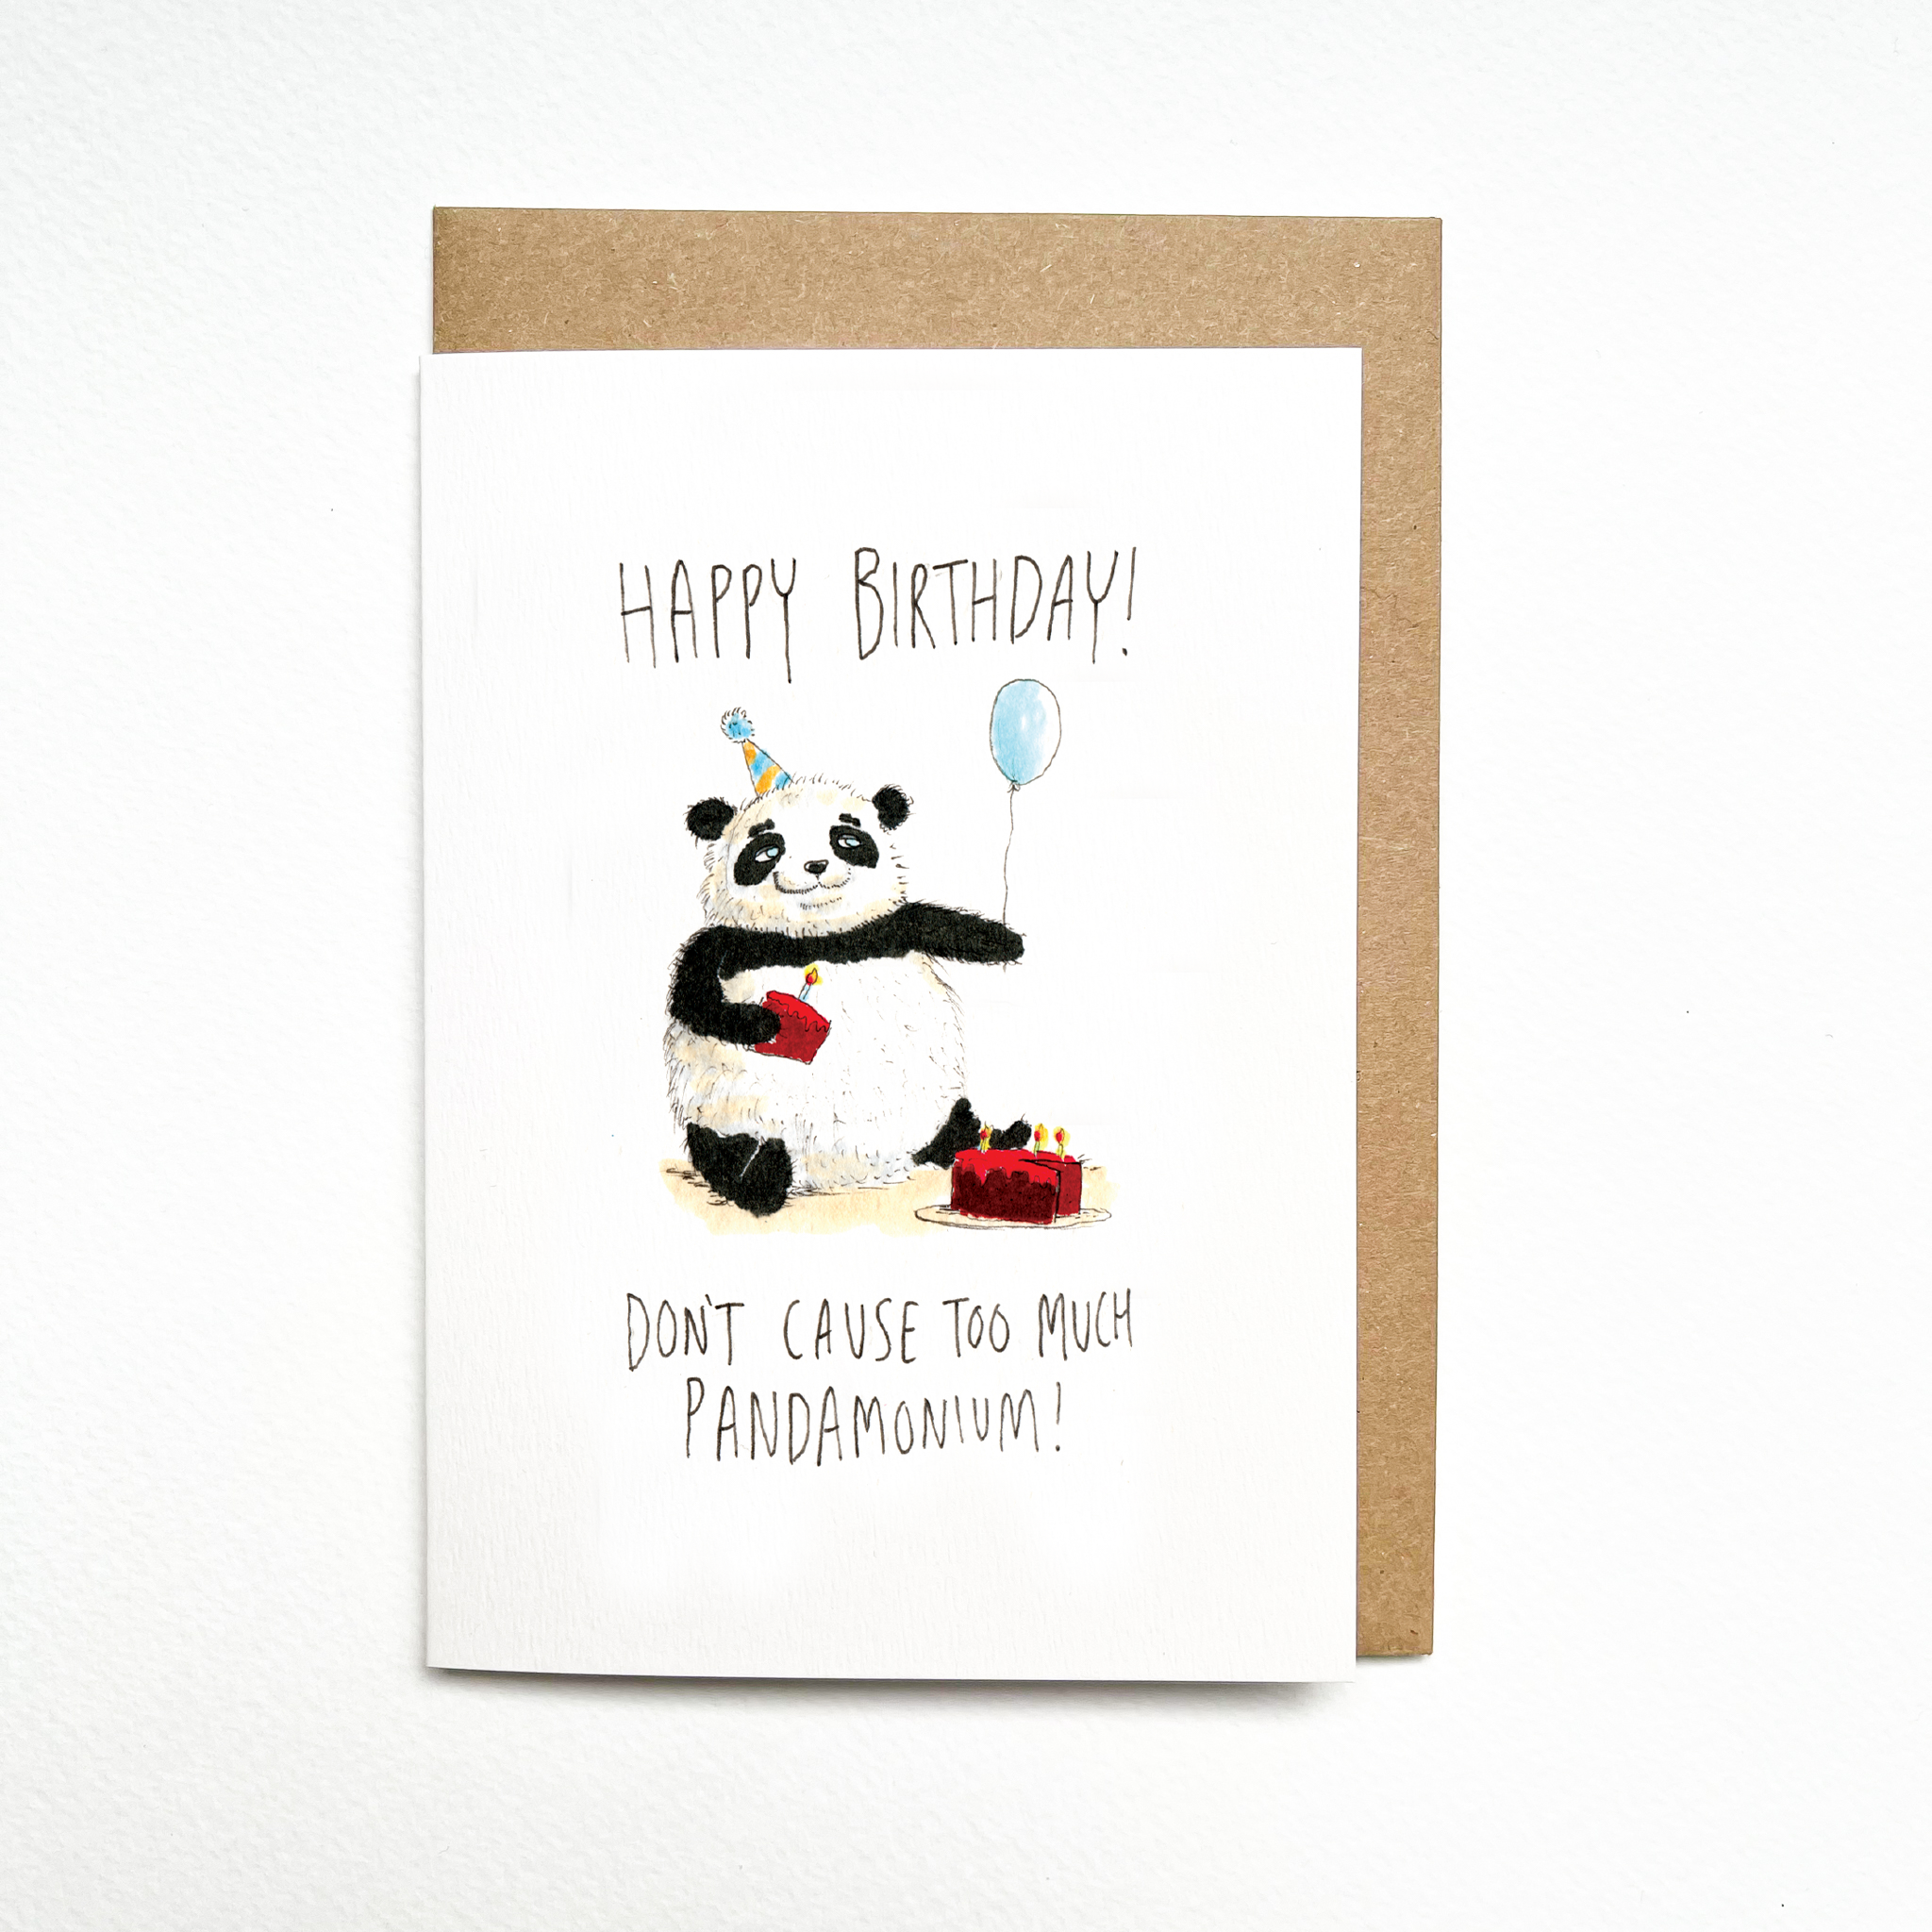 Happy Birthday! Don't Cause Too Much Pandamonium - Well Drawn